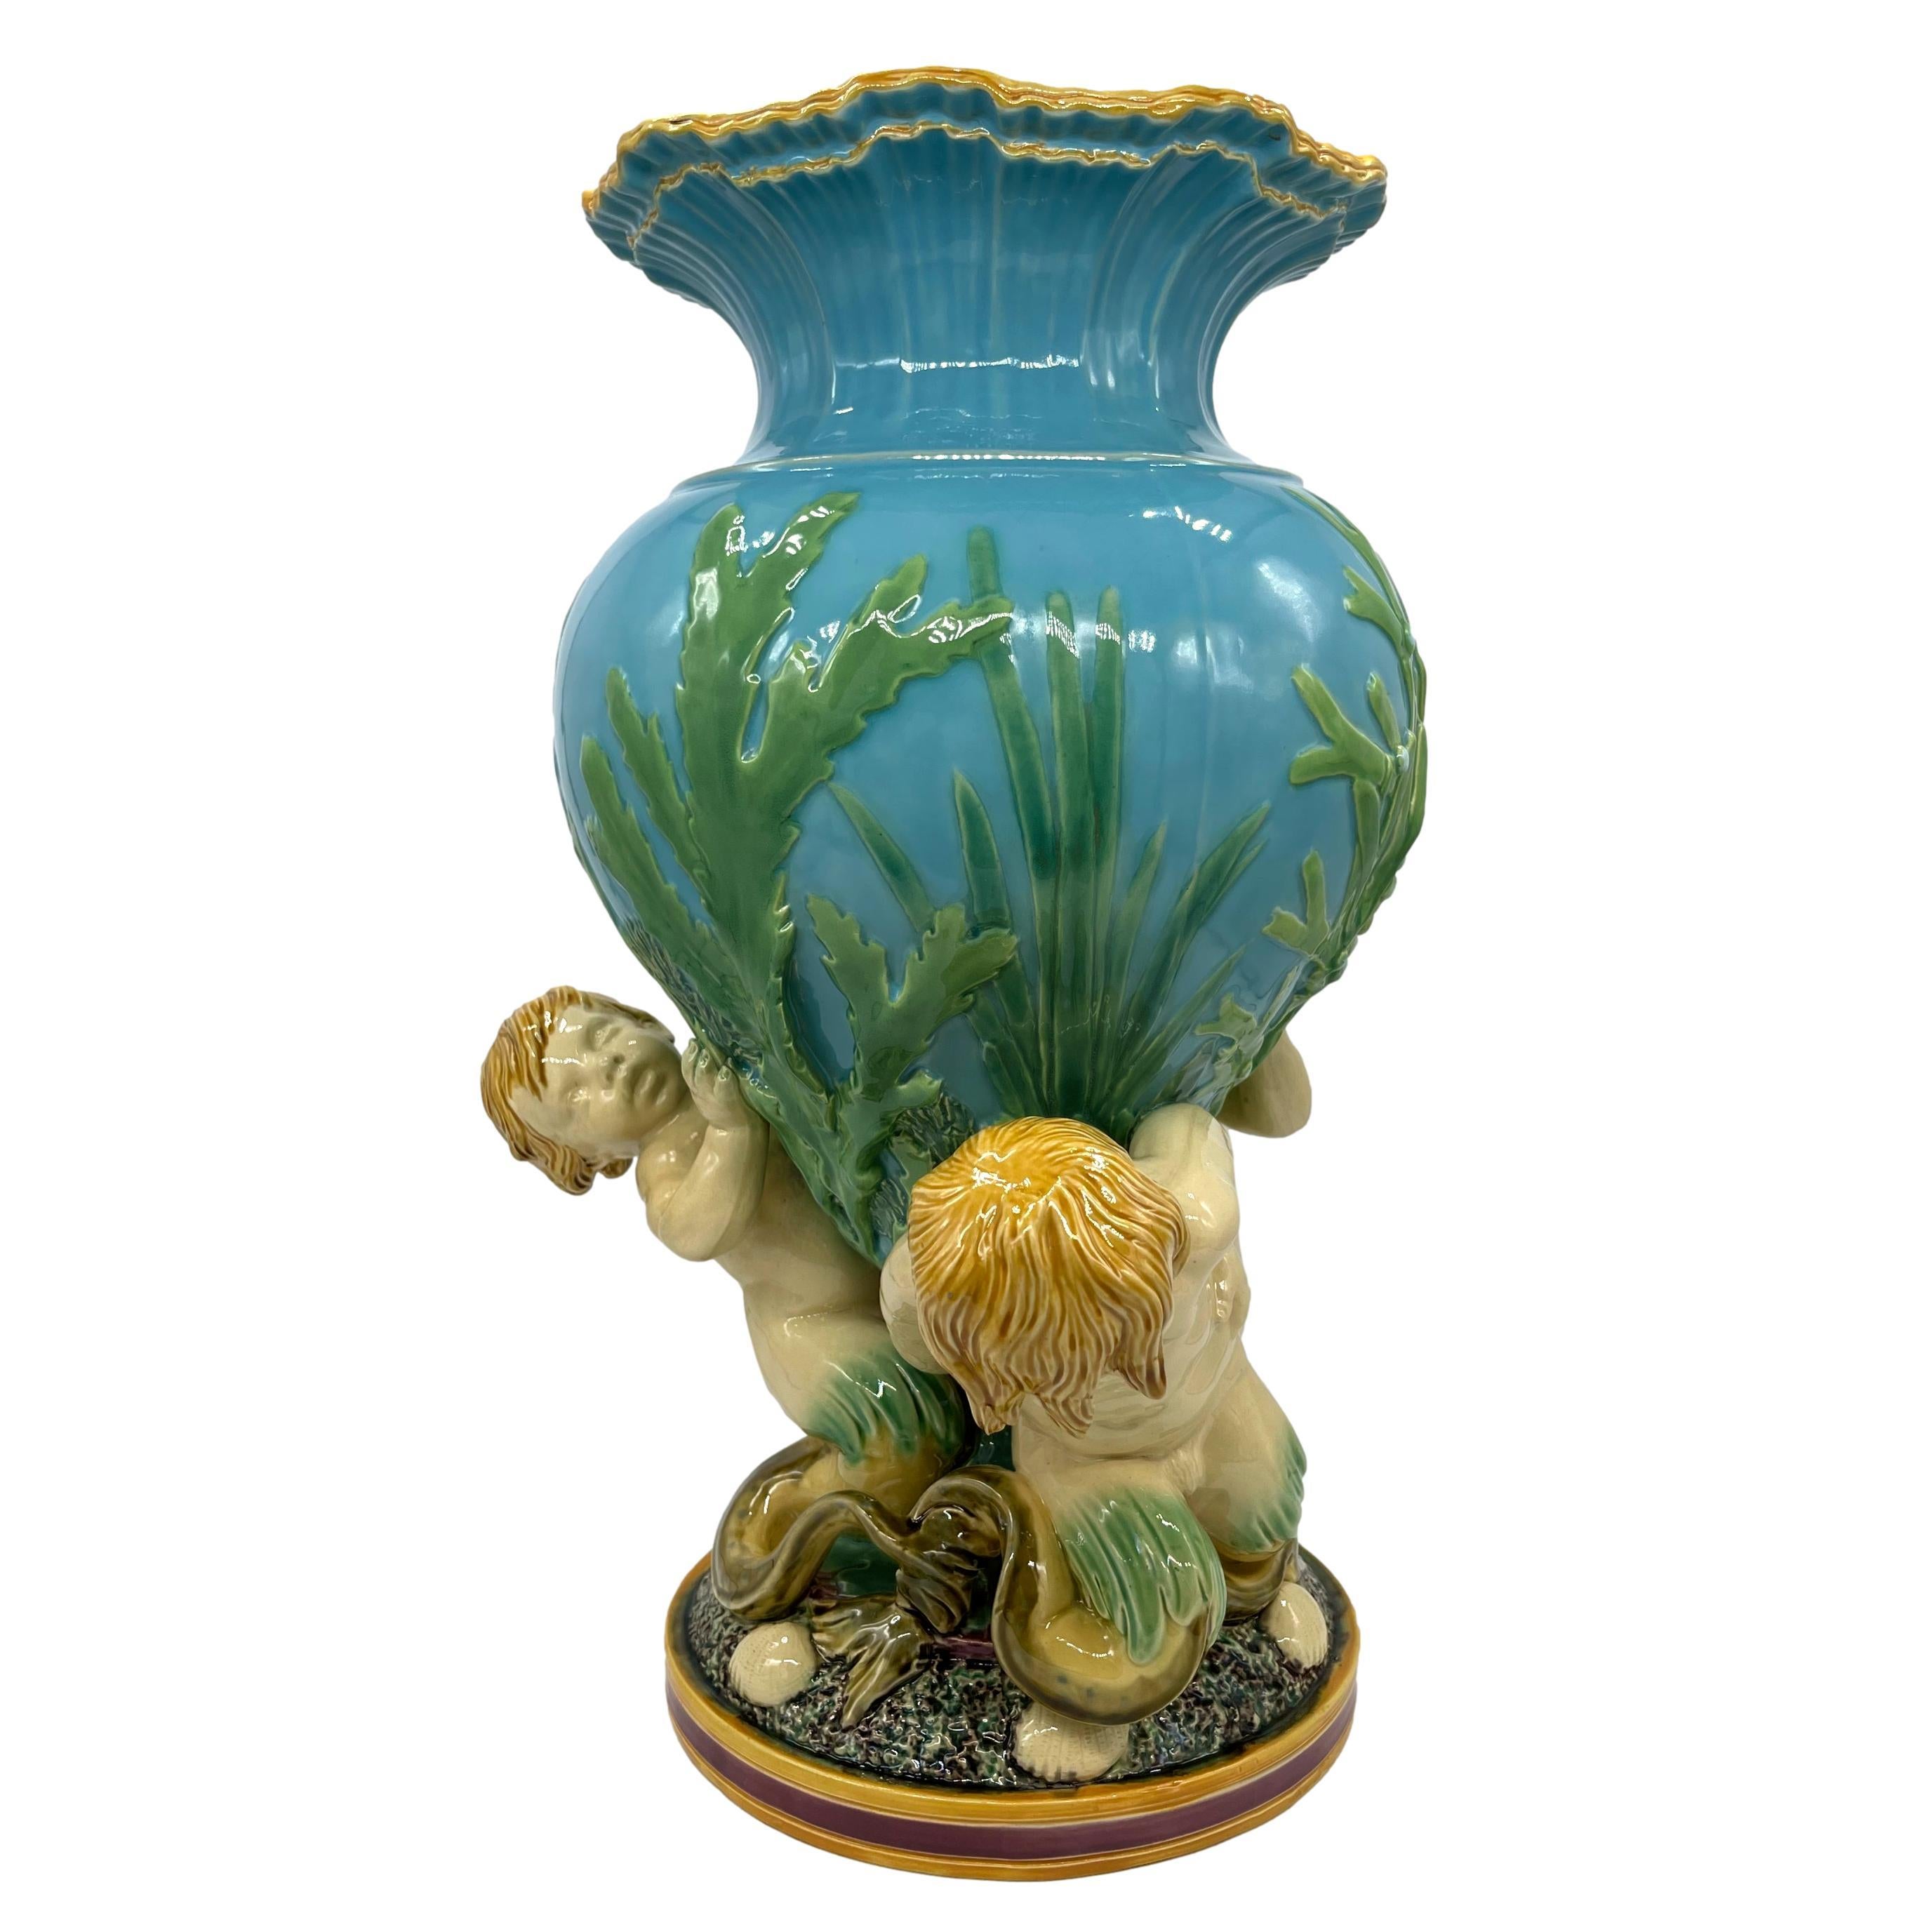 Victorian Minton Majolica Triton Marine Vase on Turquoise Ground, Dated 1868